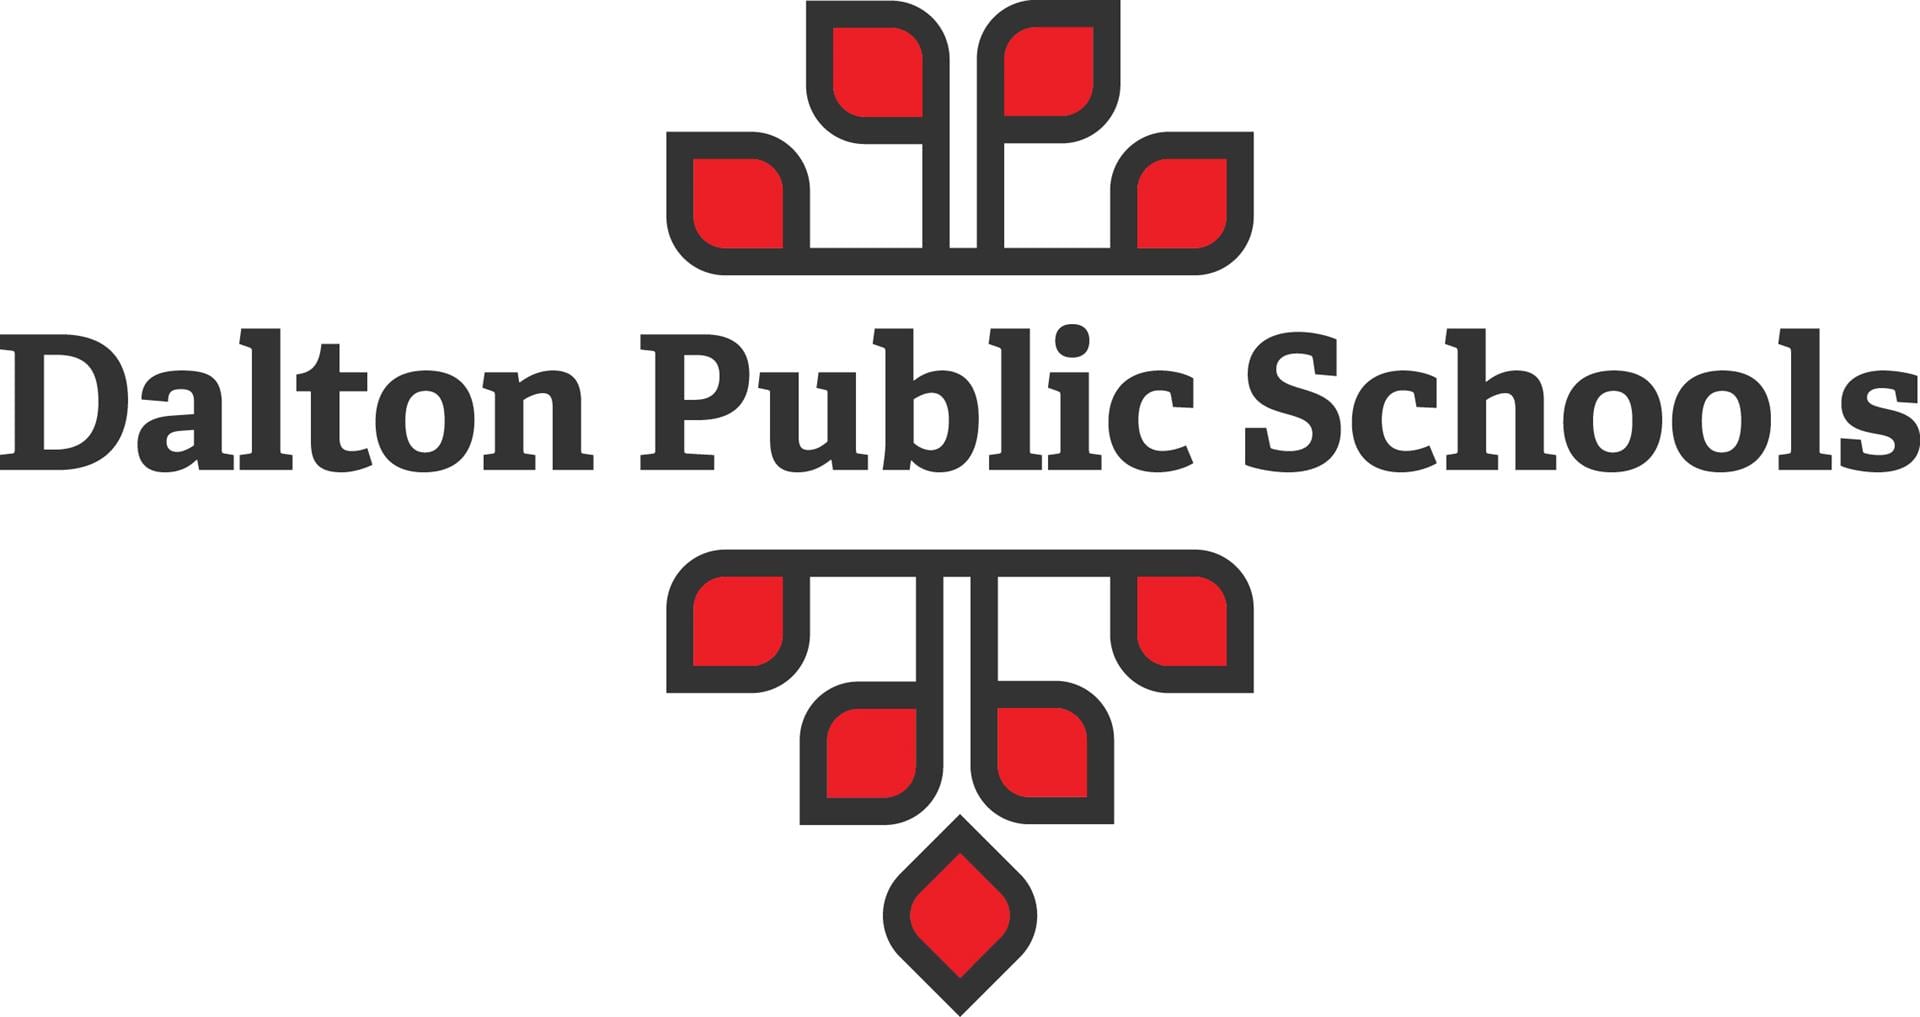 Dalton Public Schools logo and illustration on a white background